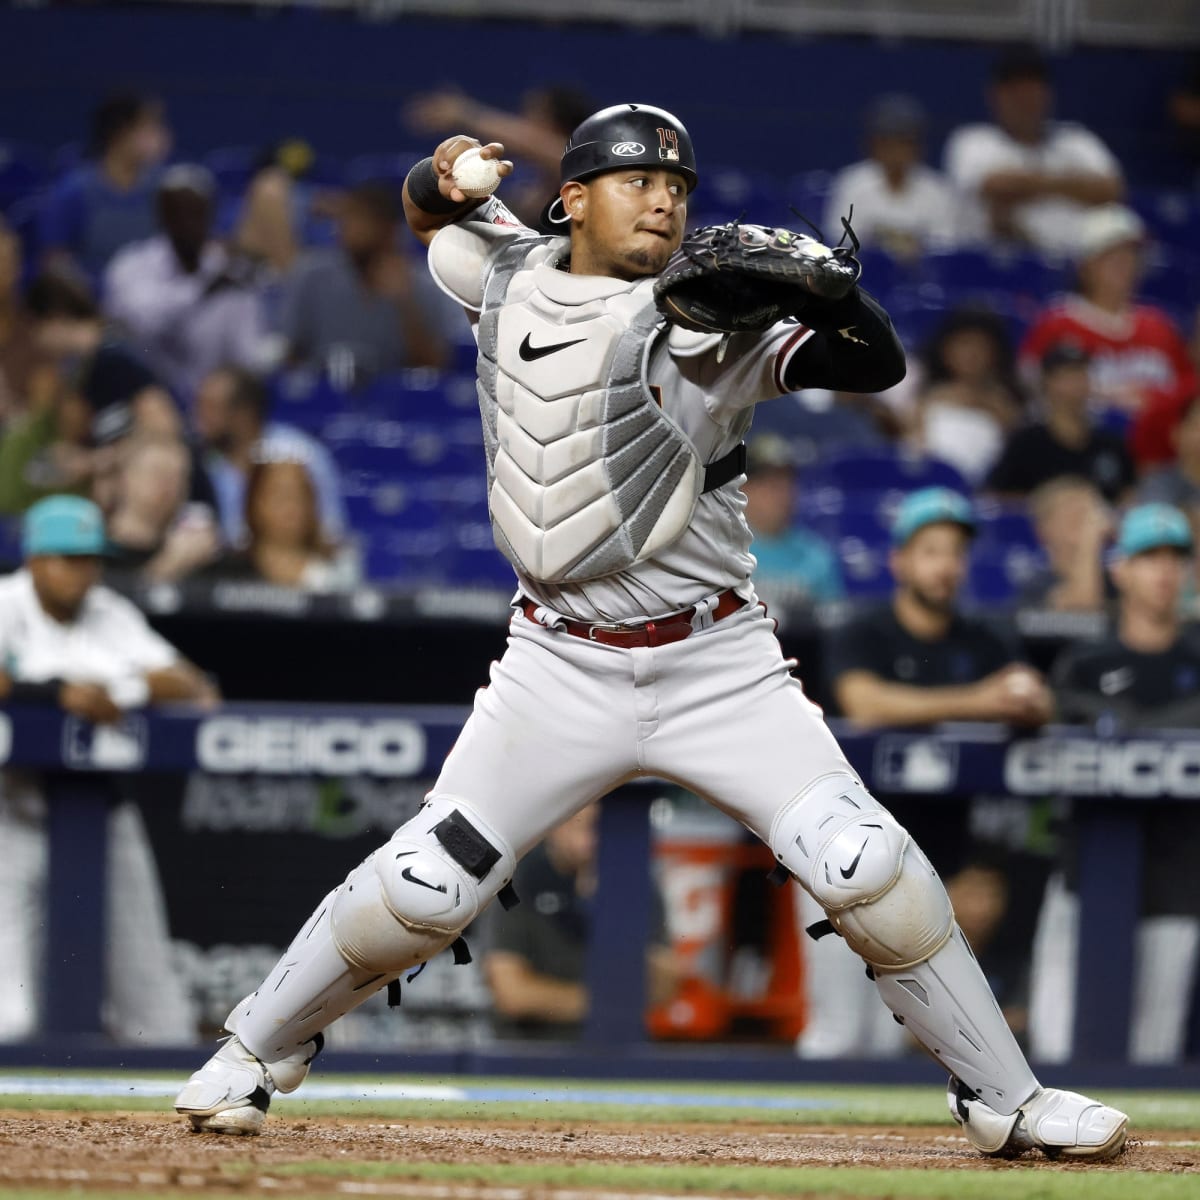 Gabriel Moreno - MLB Catcher - News, Stats, Bio and more - The